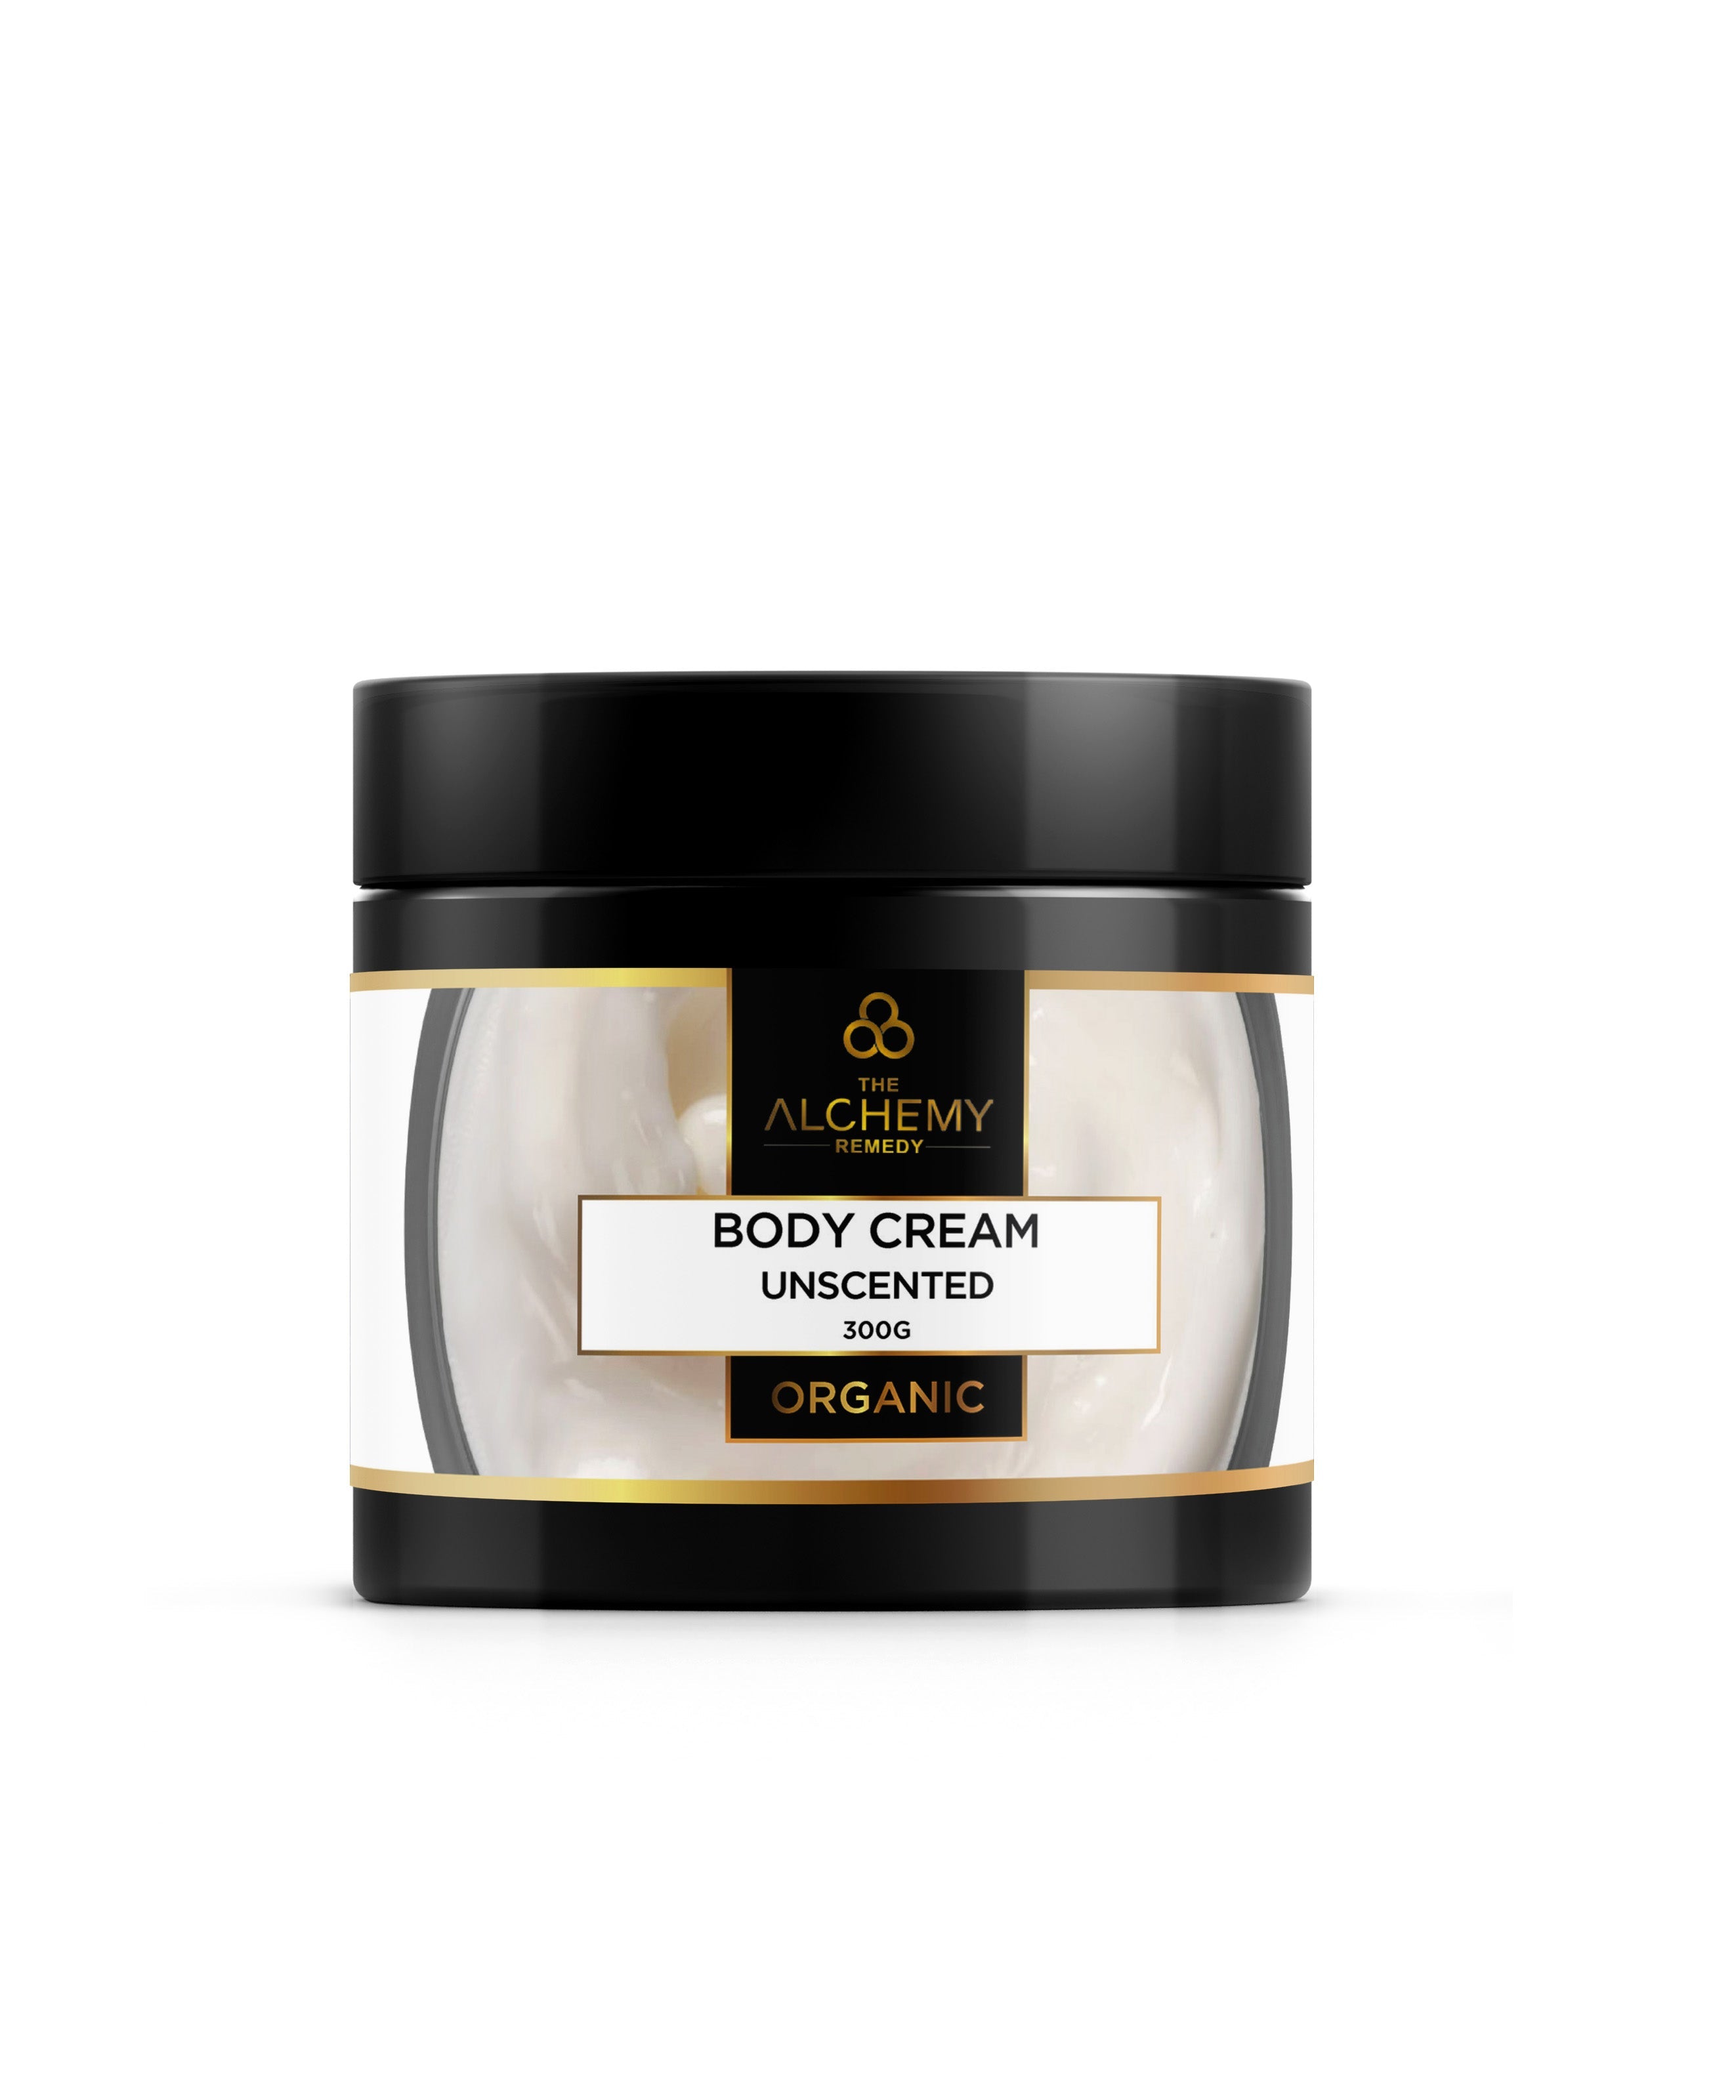 Unscented Organic Body Cream - The Alchemy Remedy